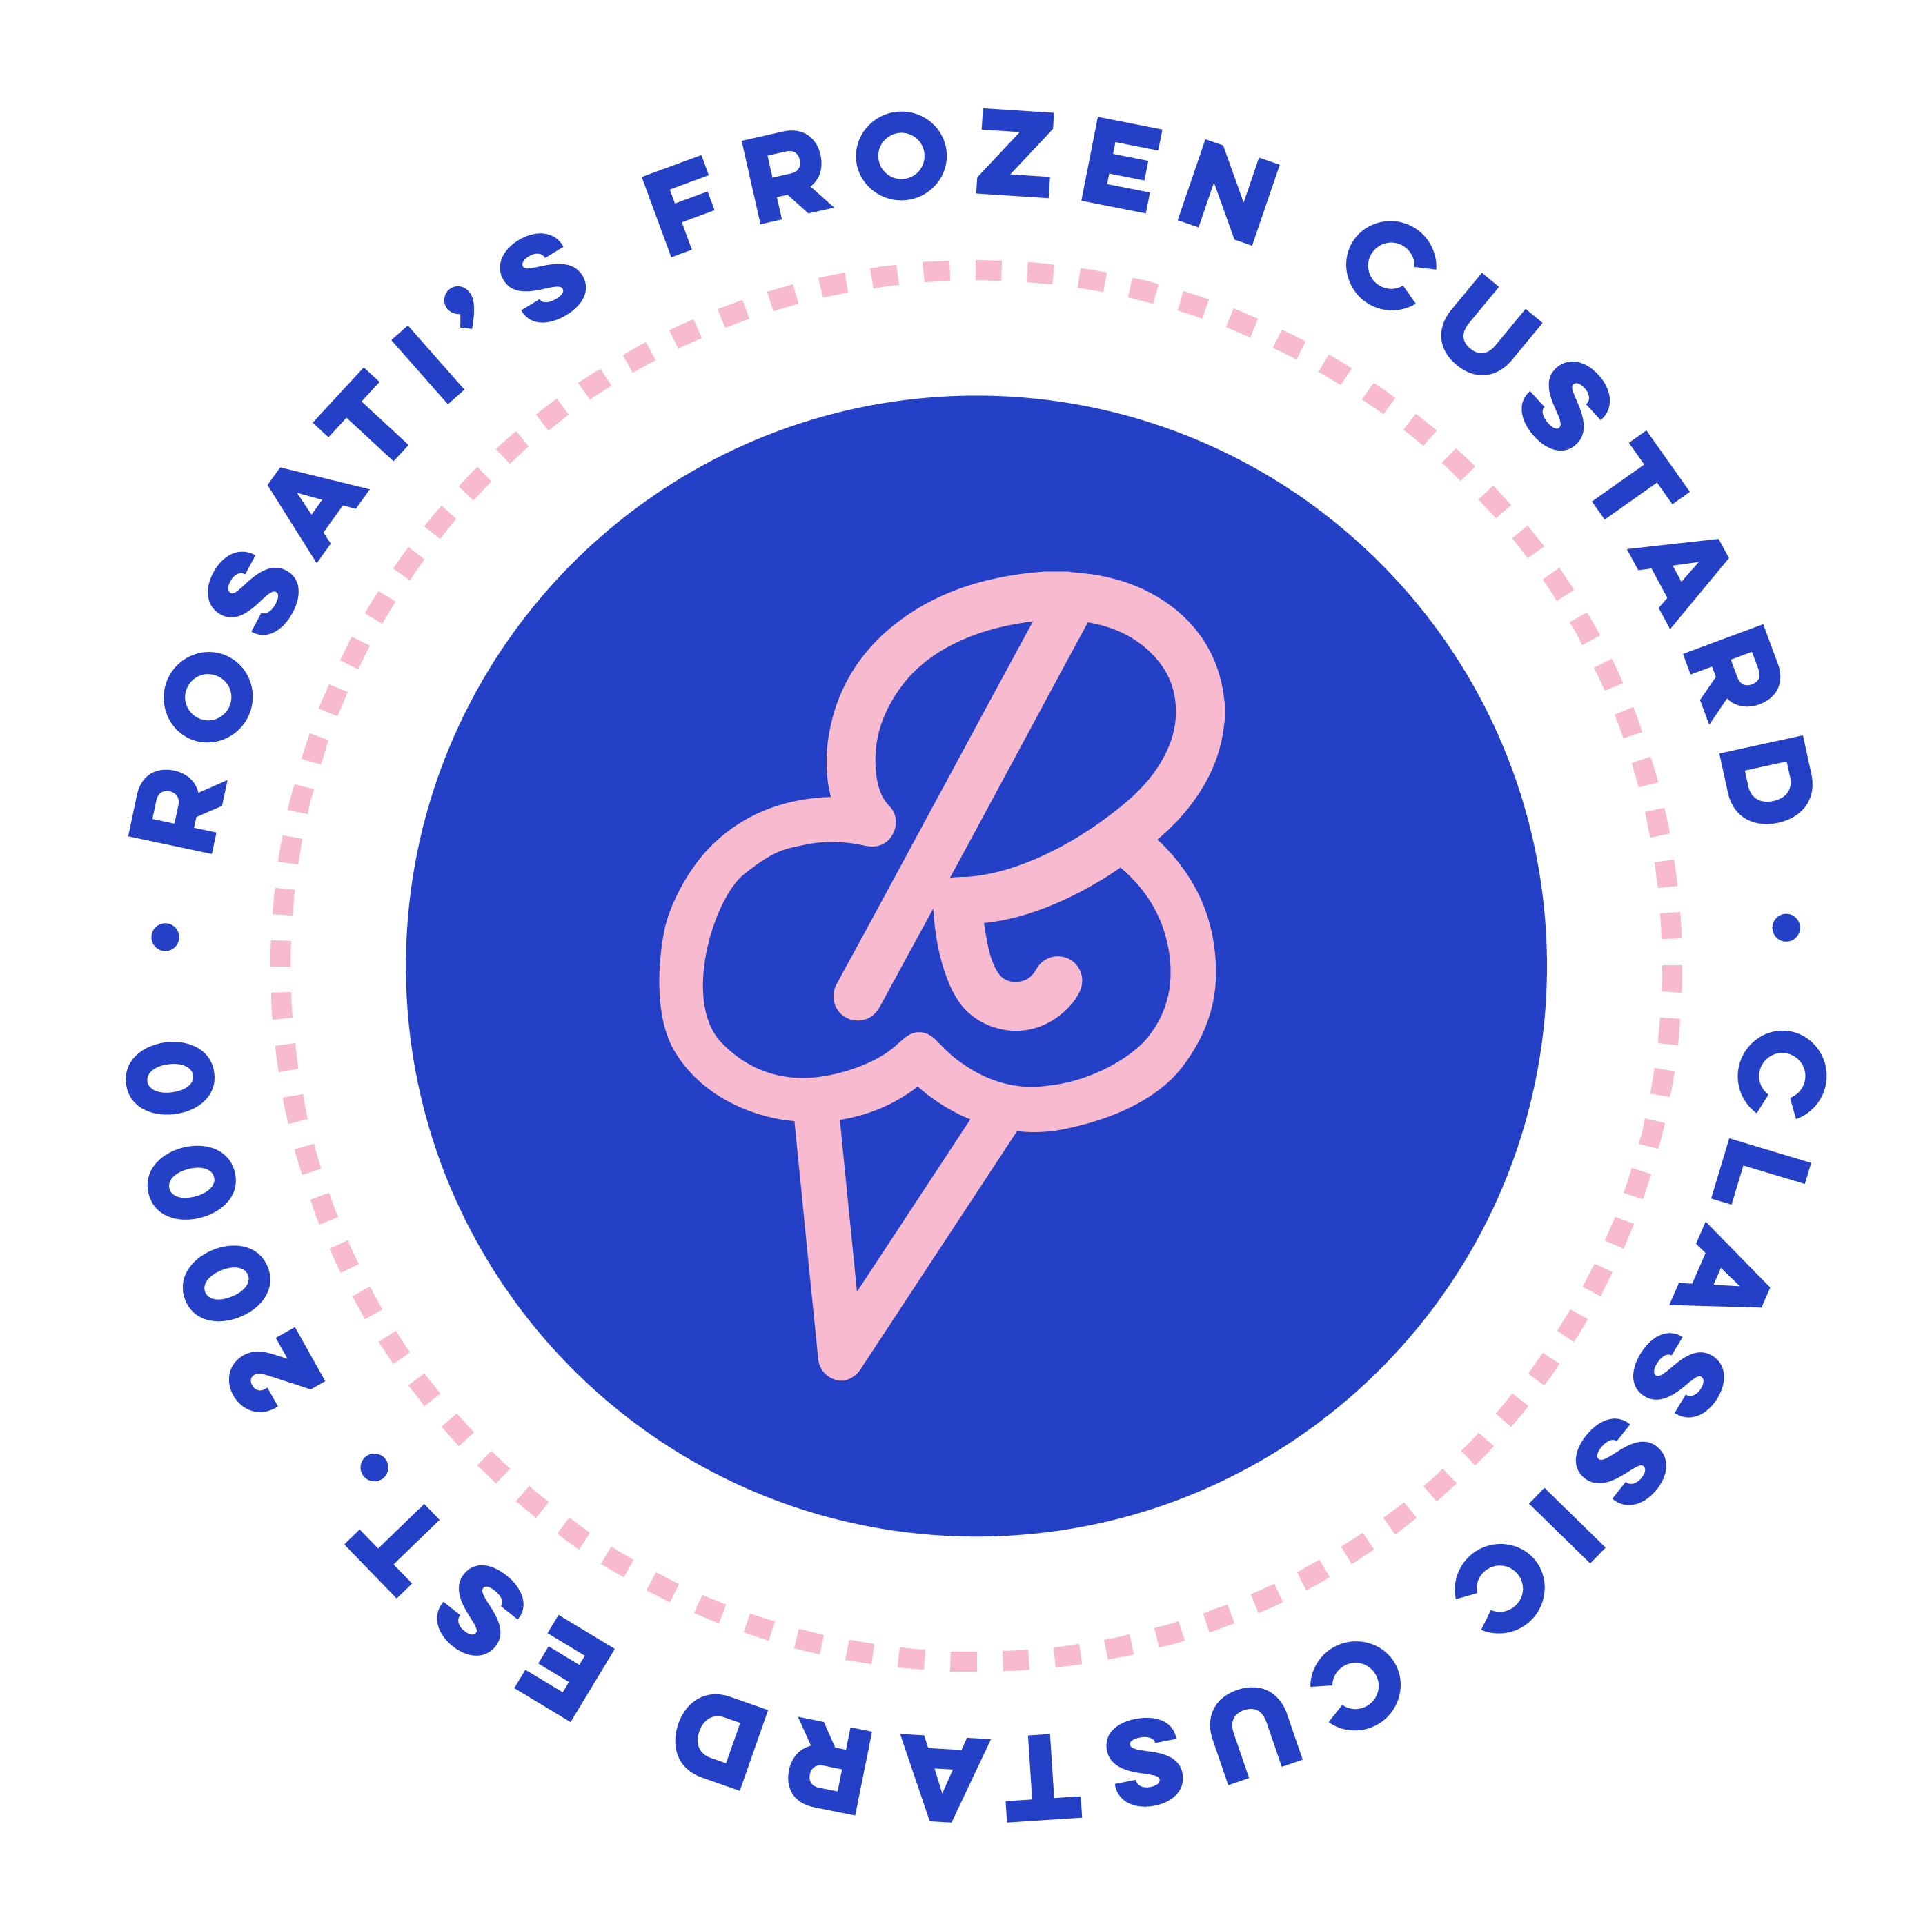 Rosati's Frozen Custard Logo